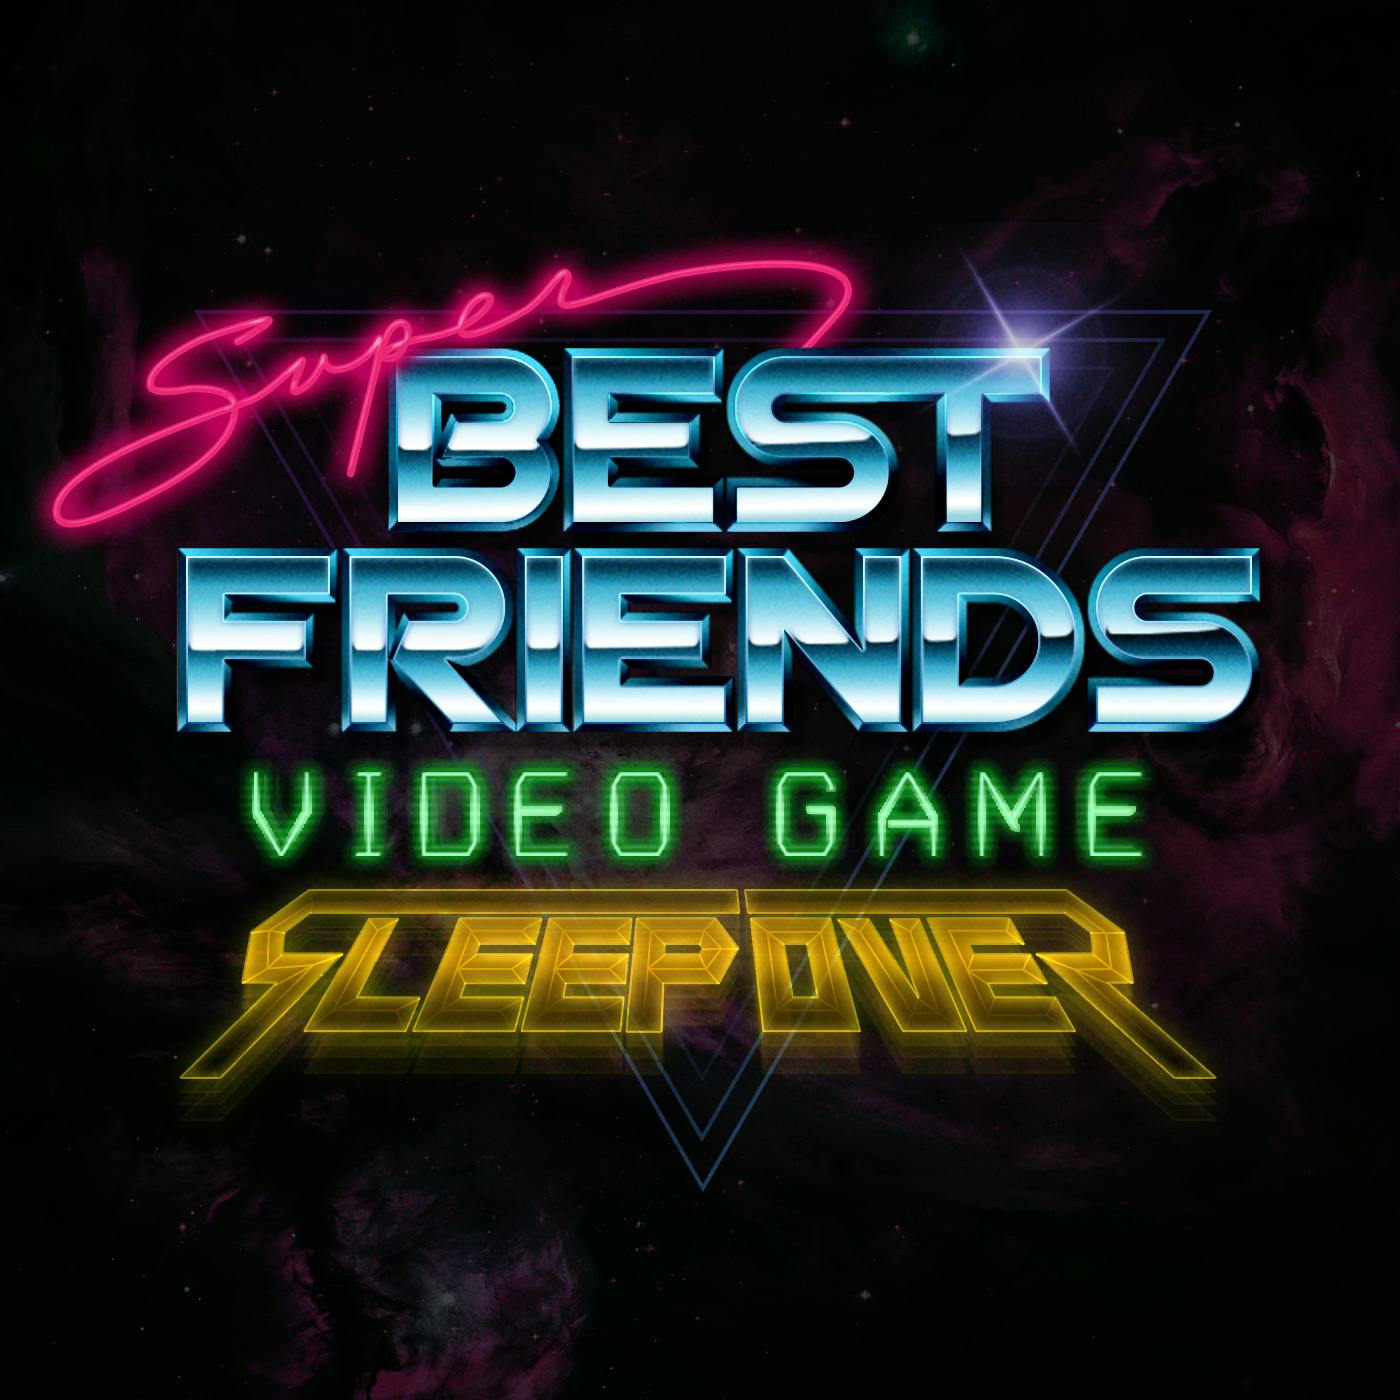 Super Best Friends Video Game Sleepover - Episode 39